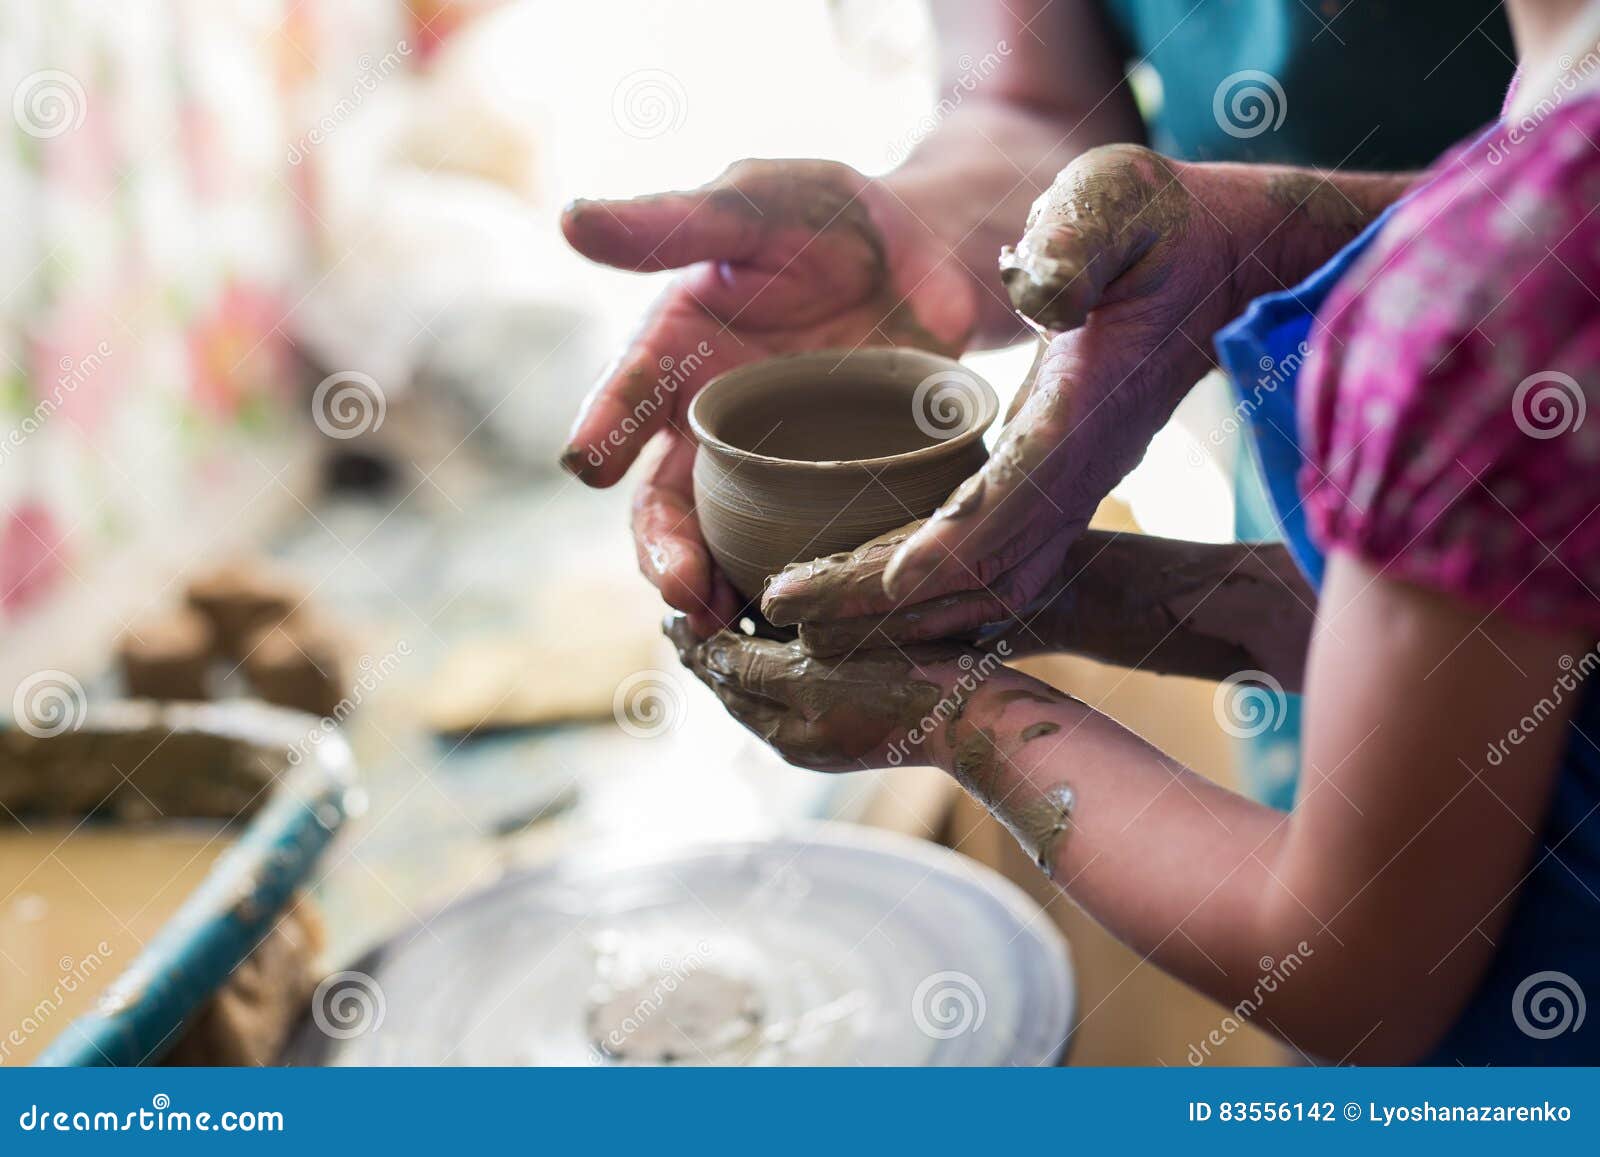 sculpting pottery